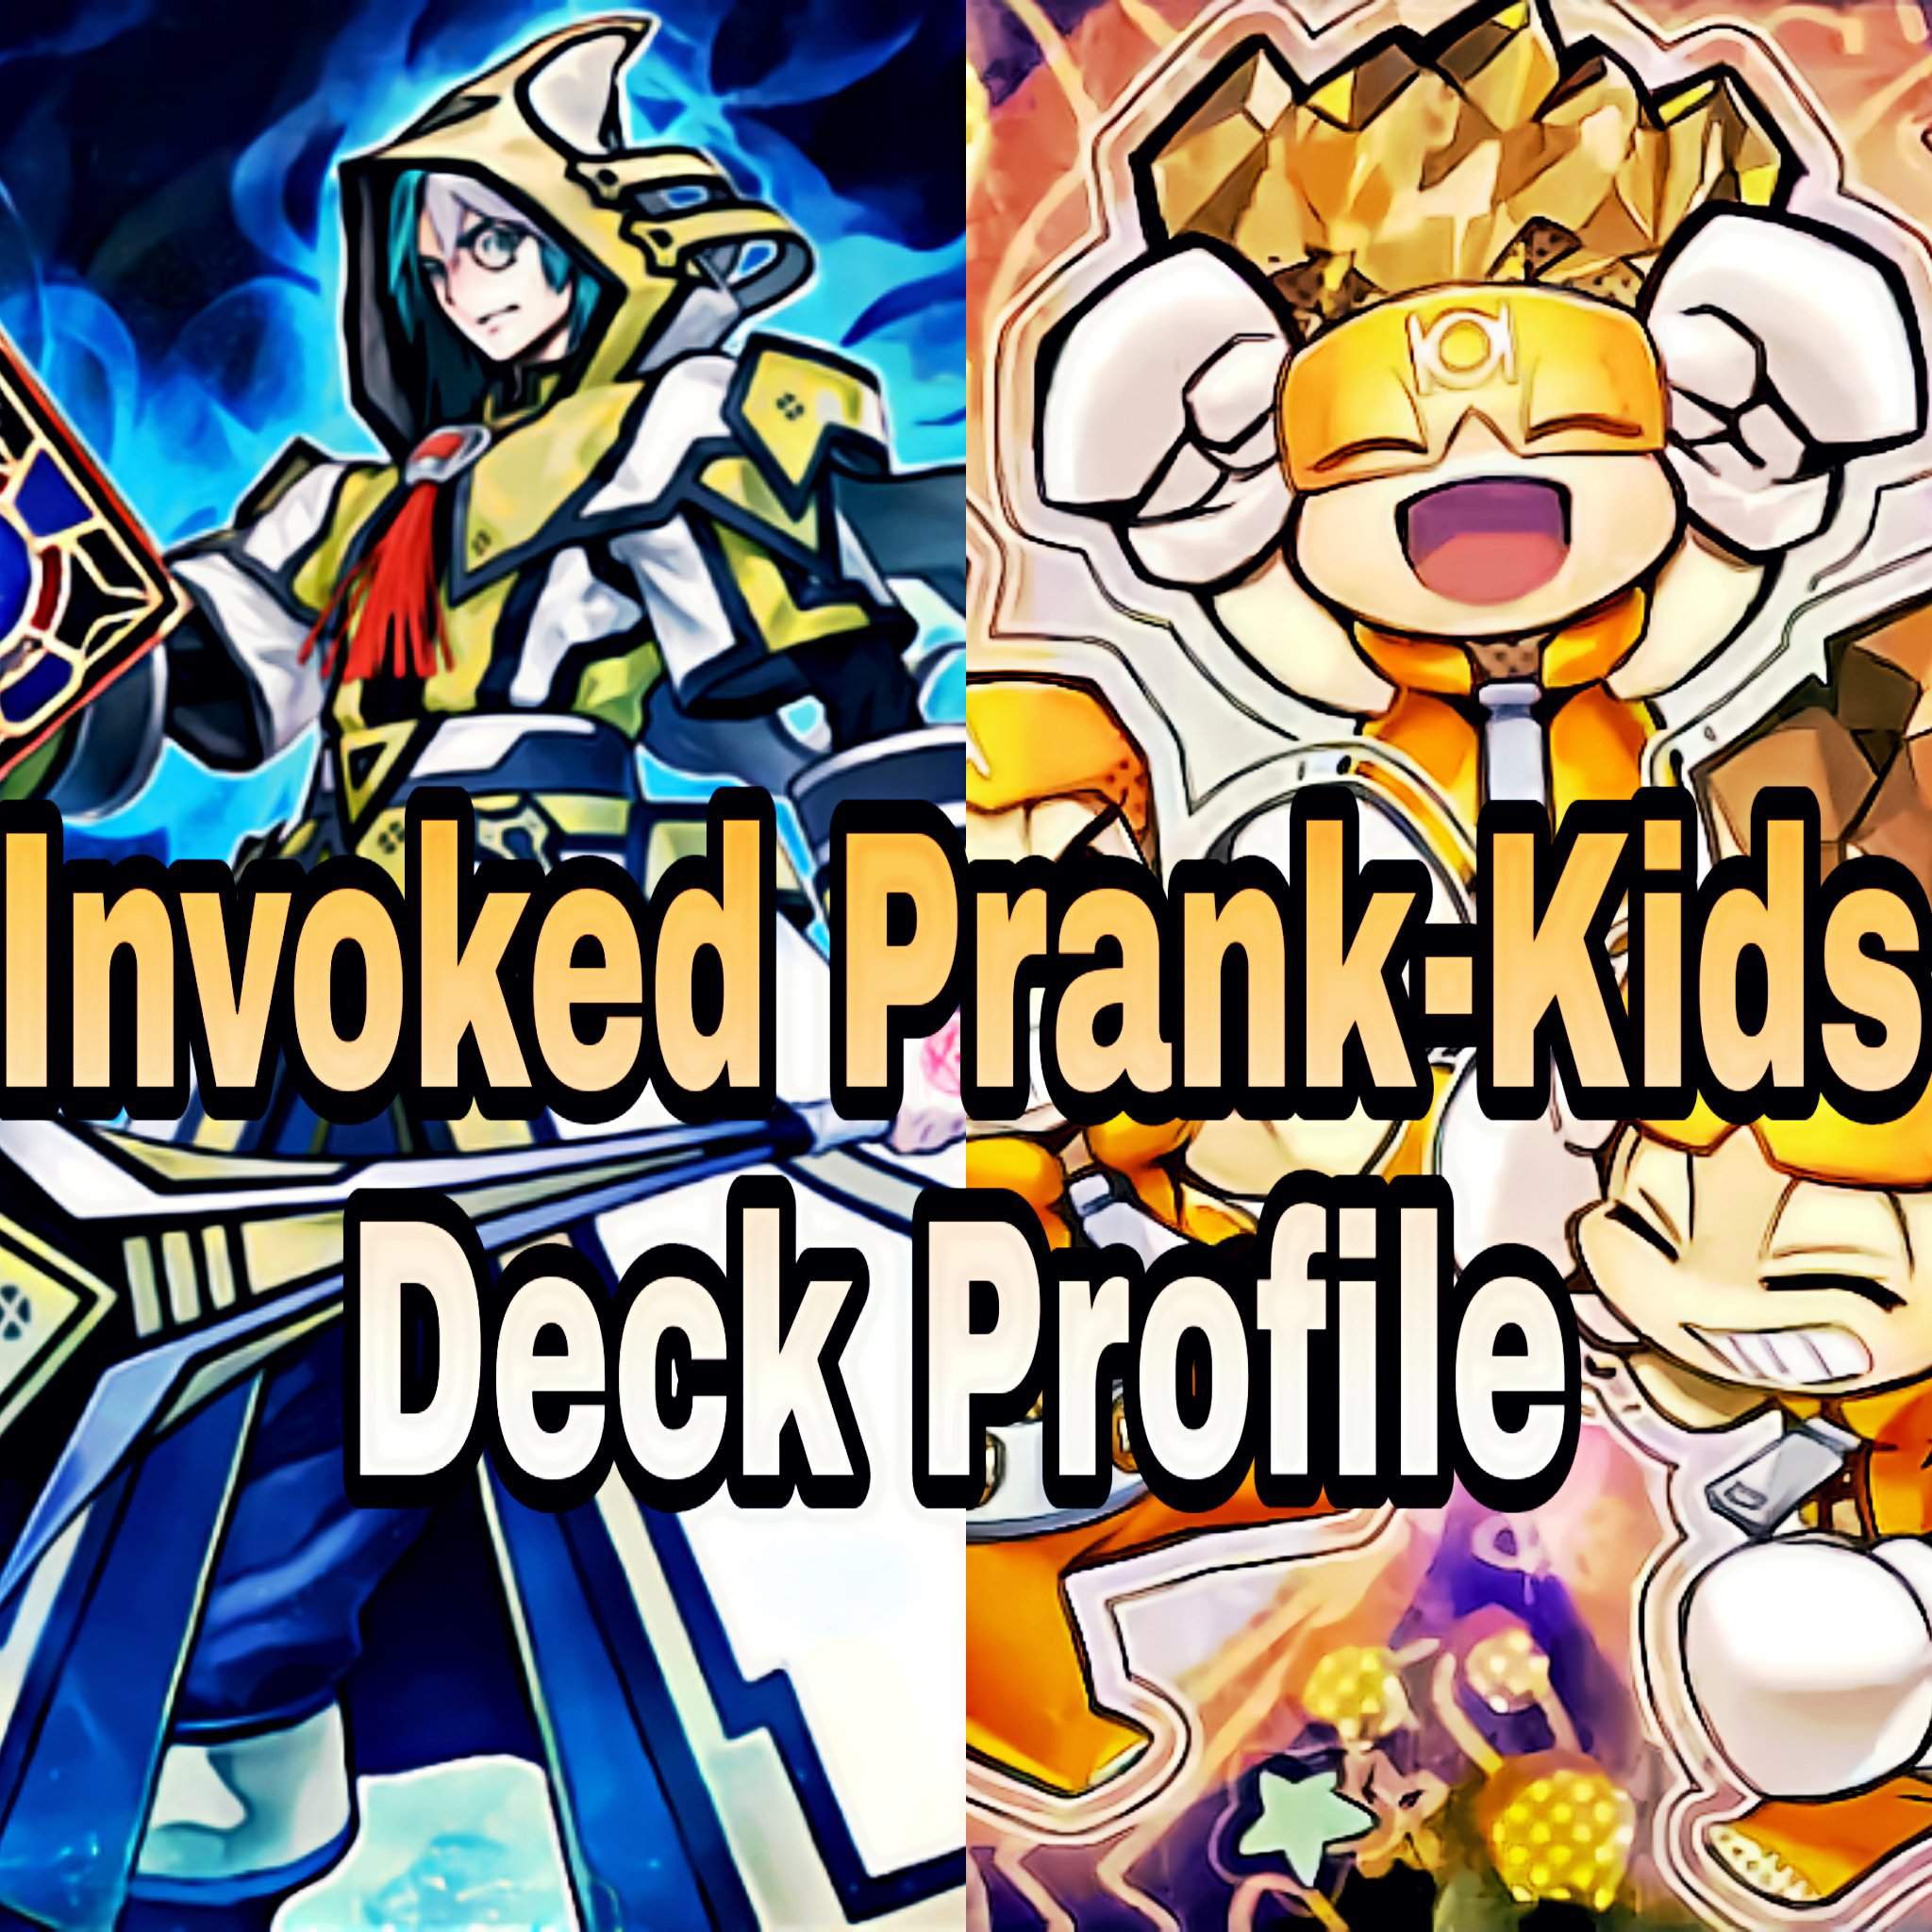 Invoked Prank Kids Deck Profile Duel Amino